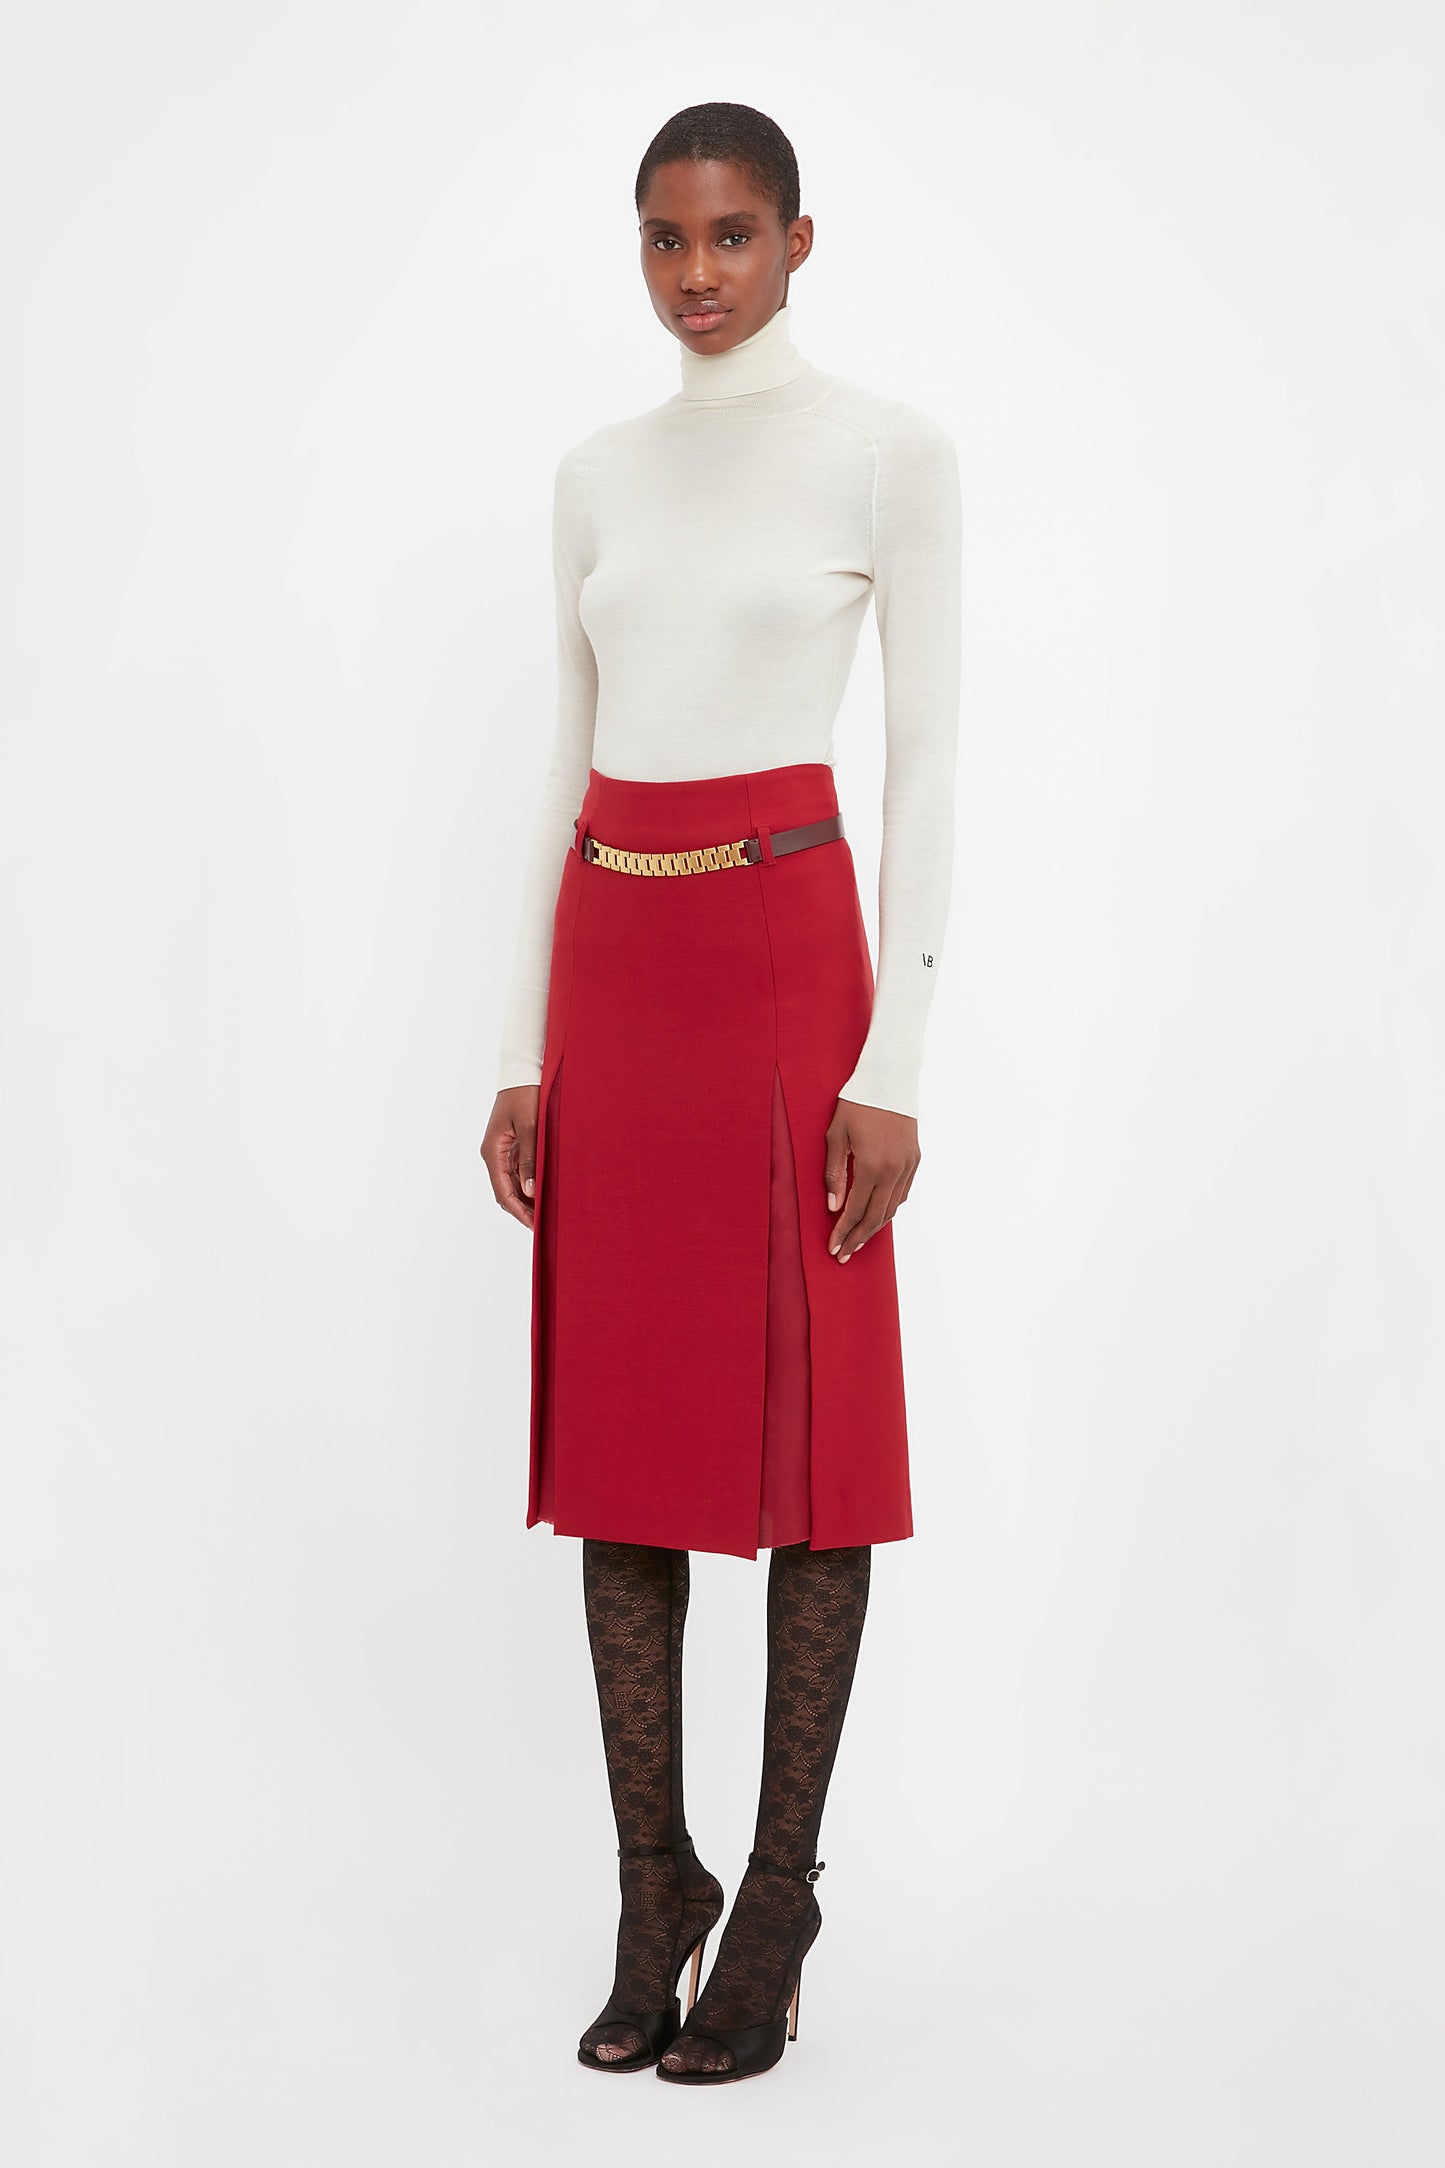 Double Layer Slit Skirt In Poppy Red